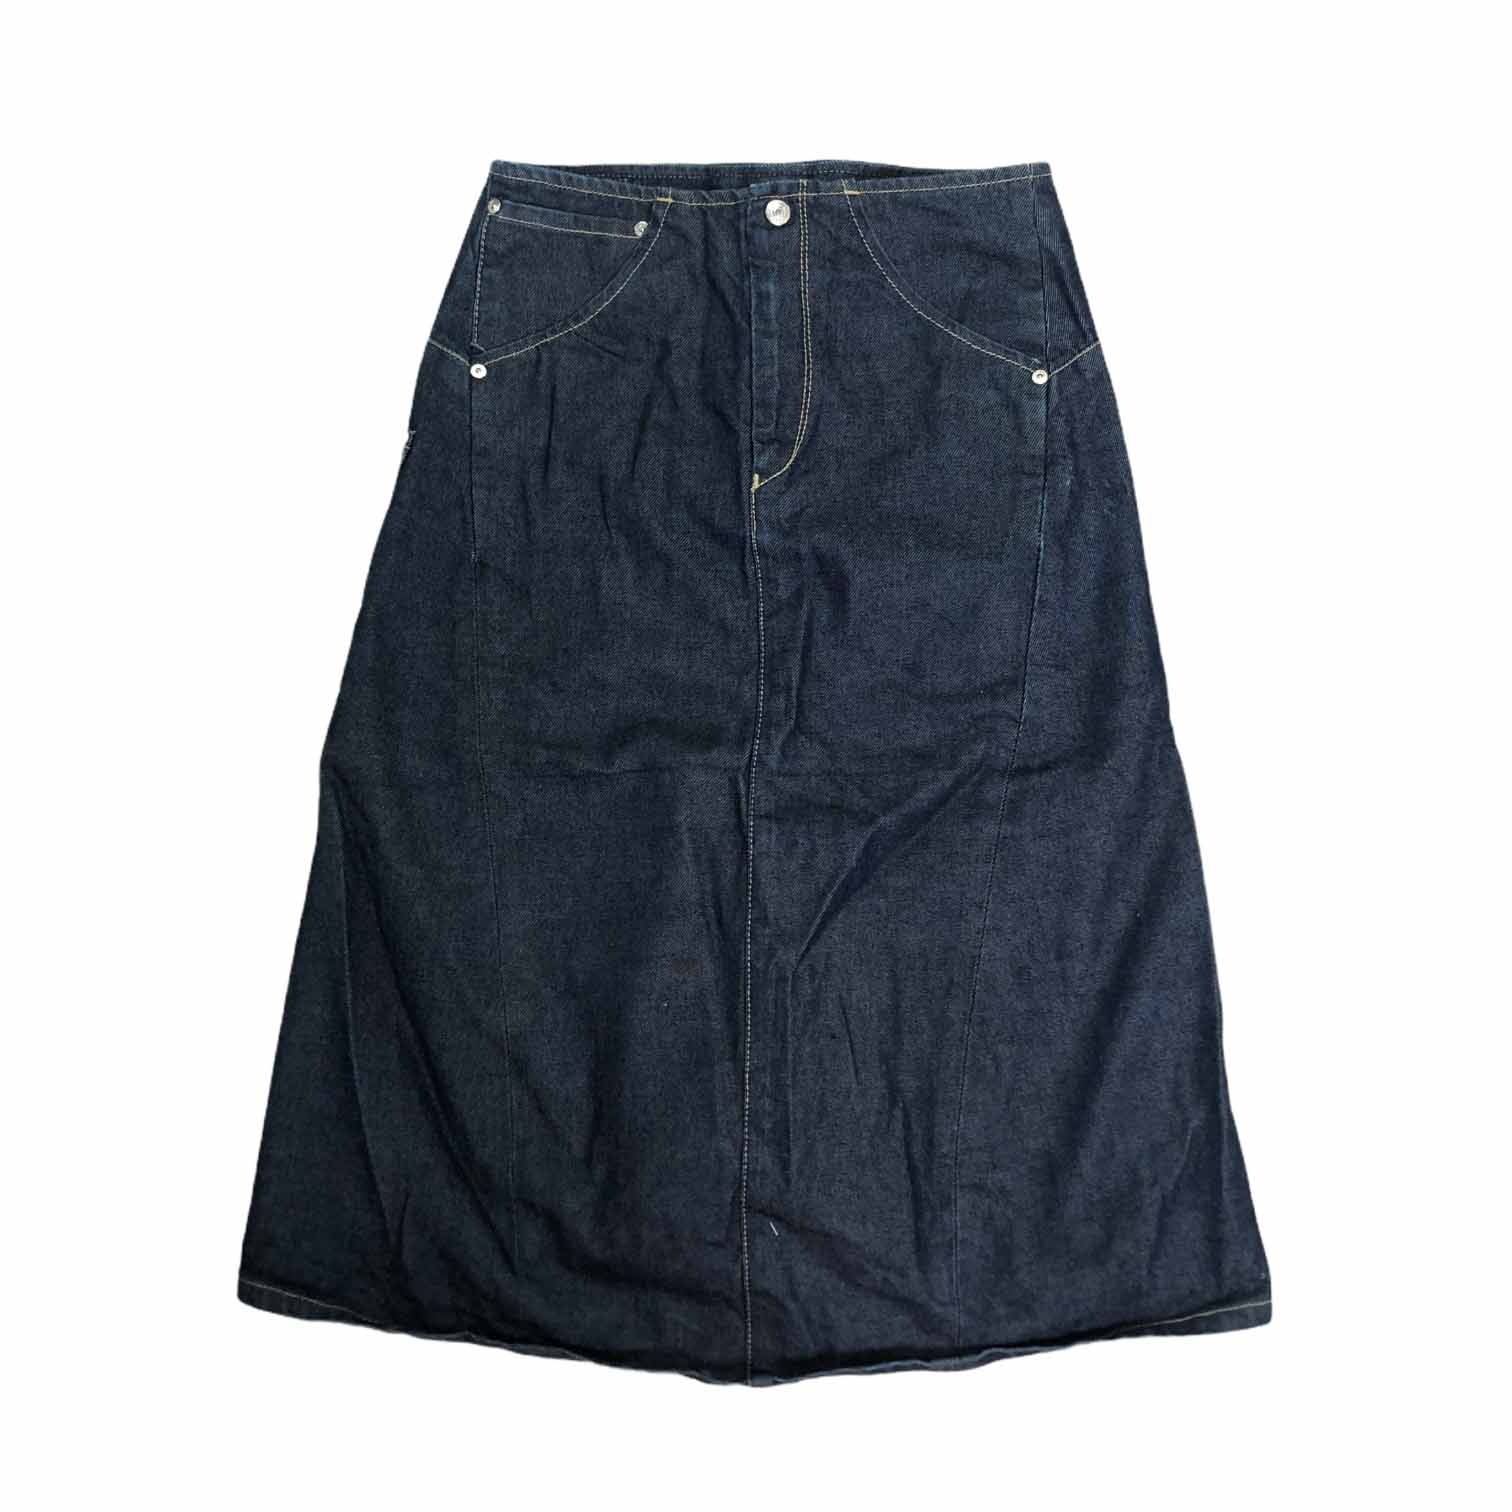 [Levis] (Vintage) Engineered Skirt - Size XS